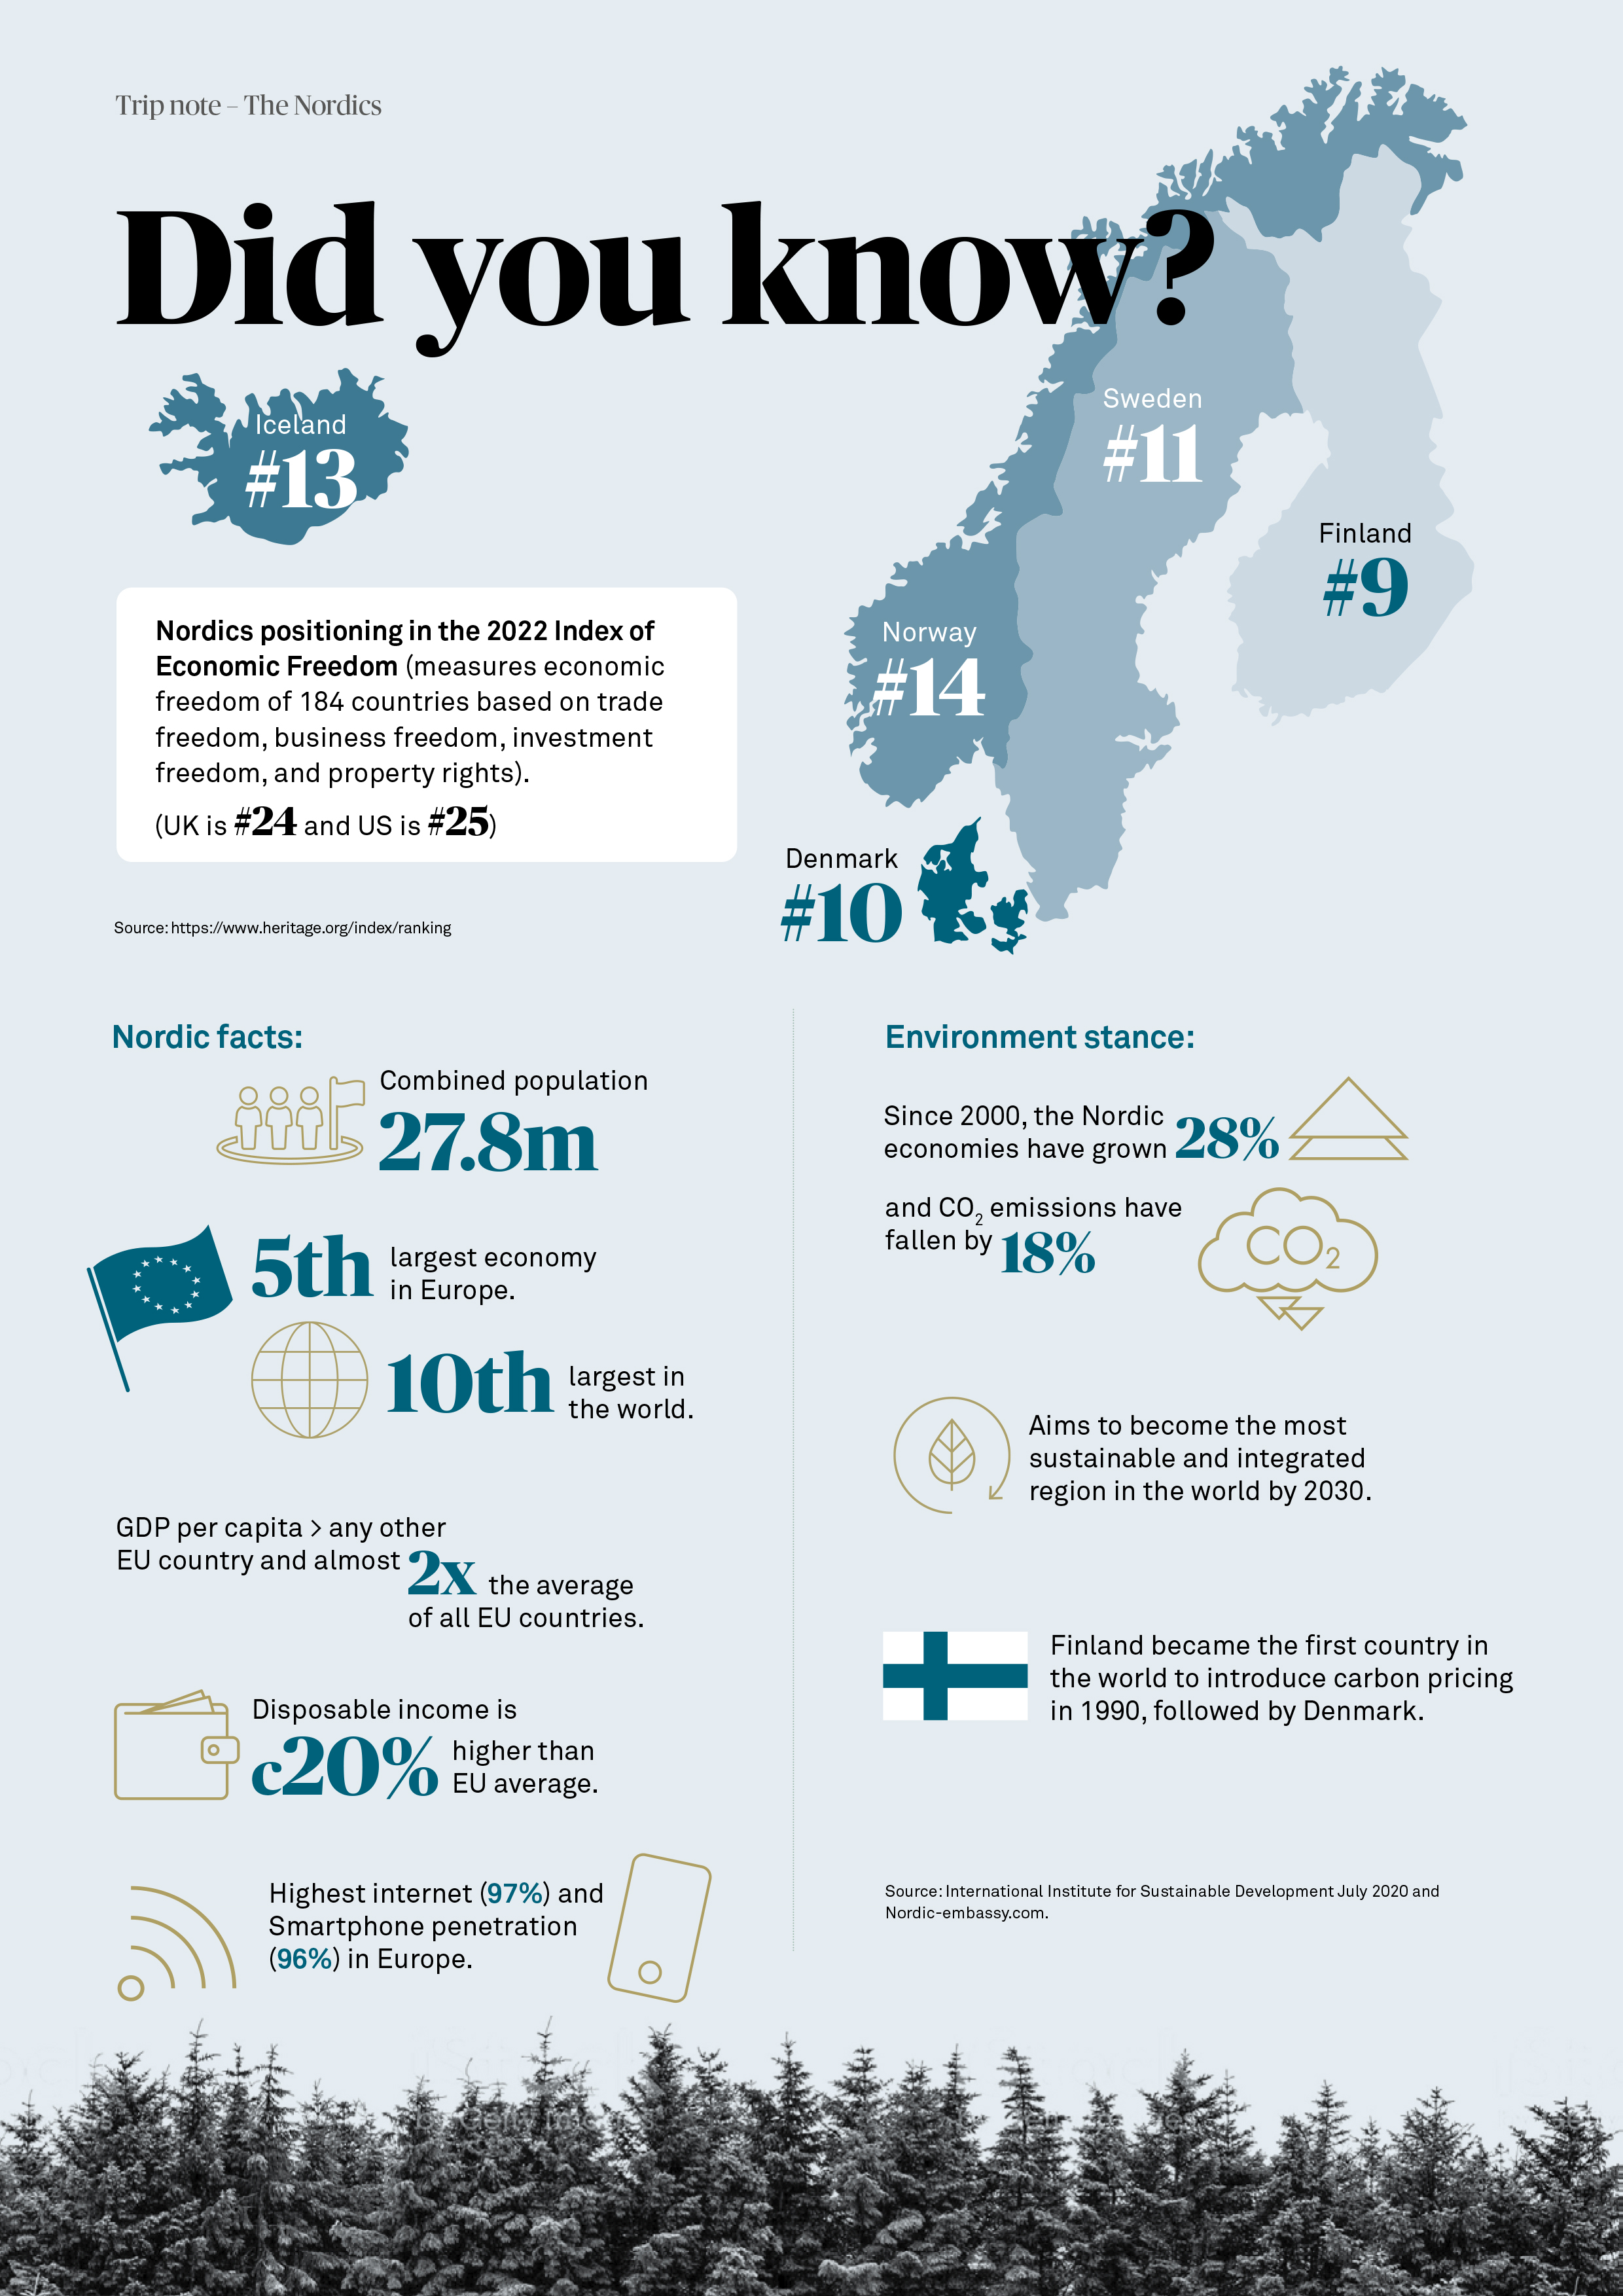 The Nordics region statistics and facts